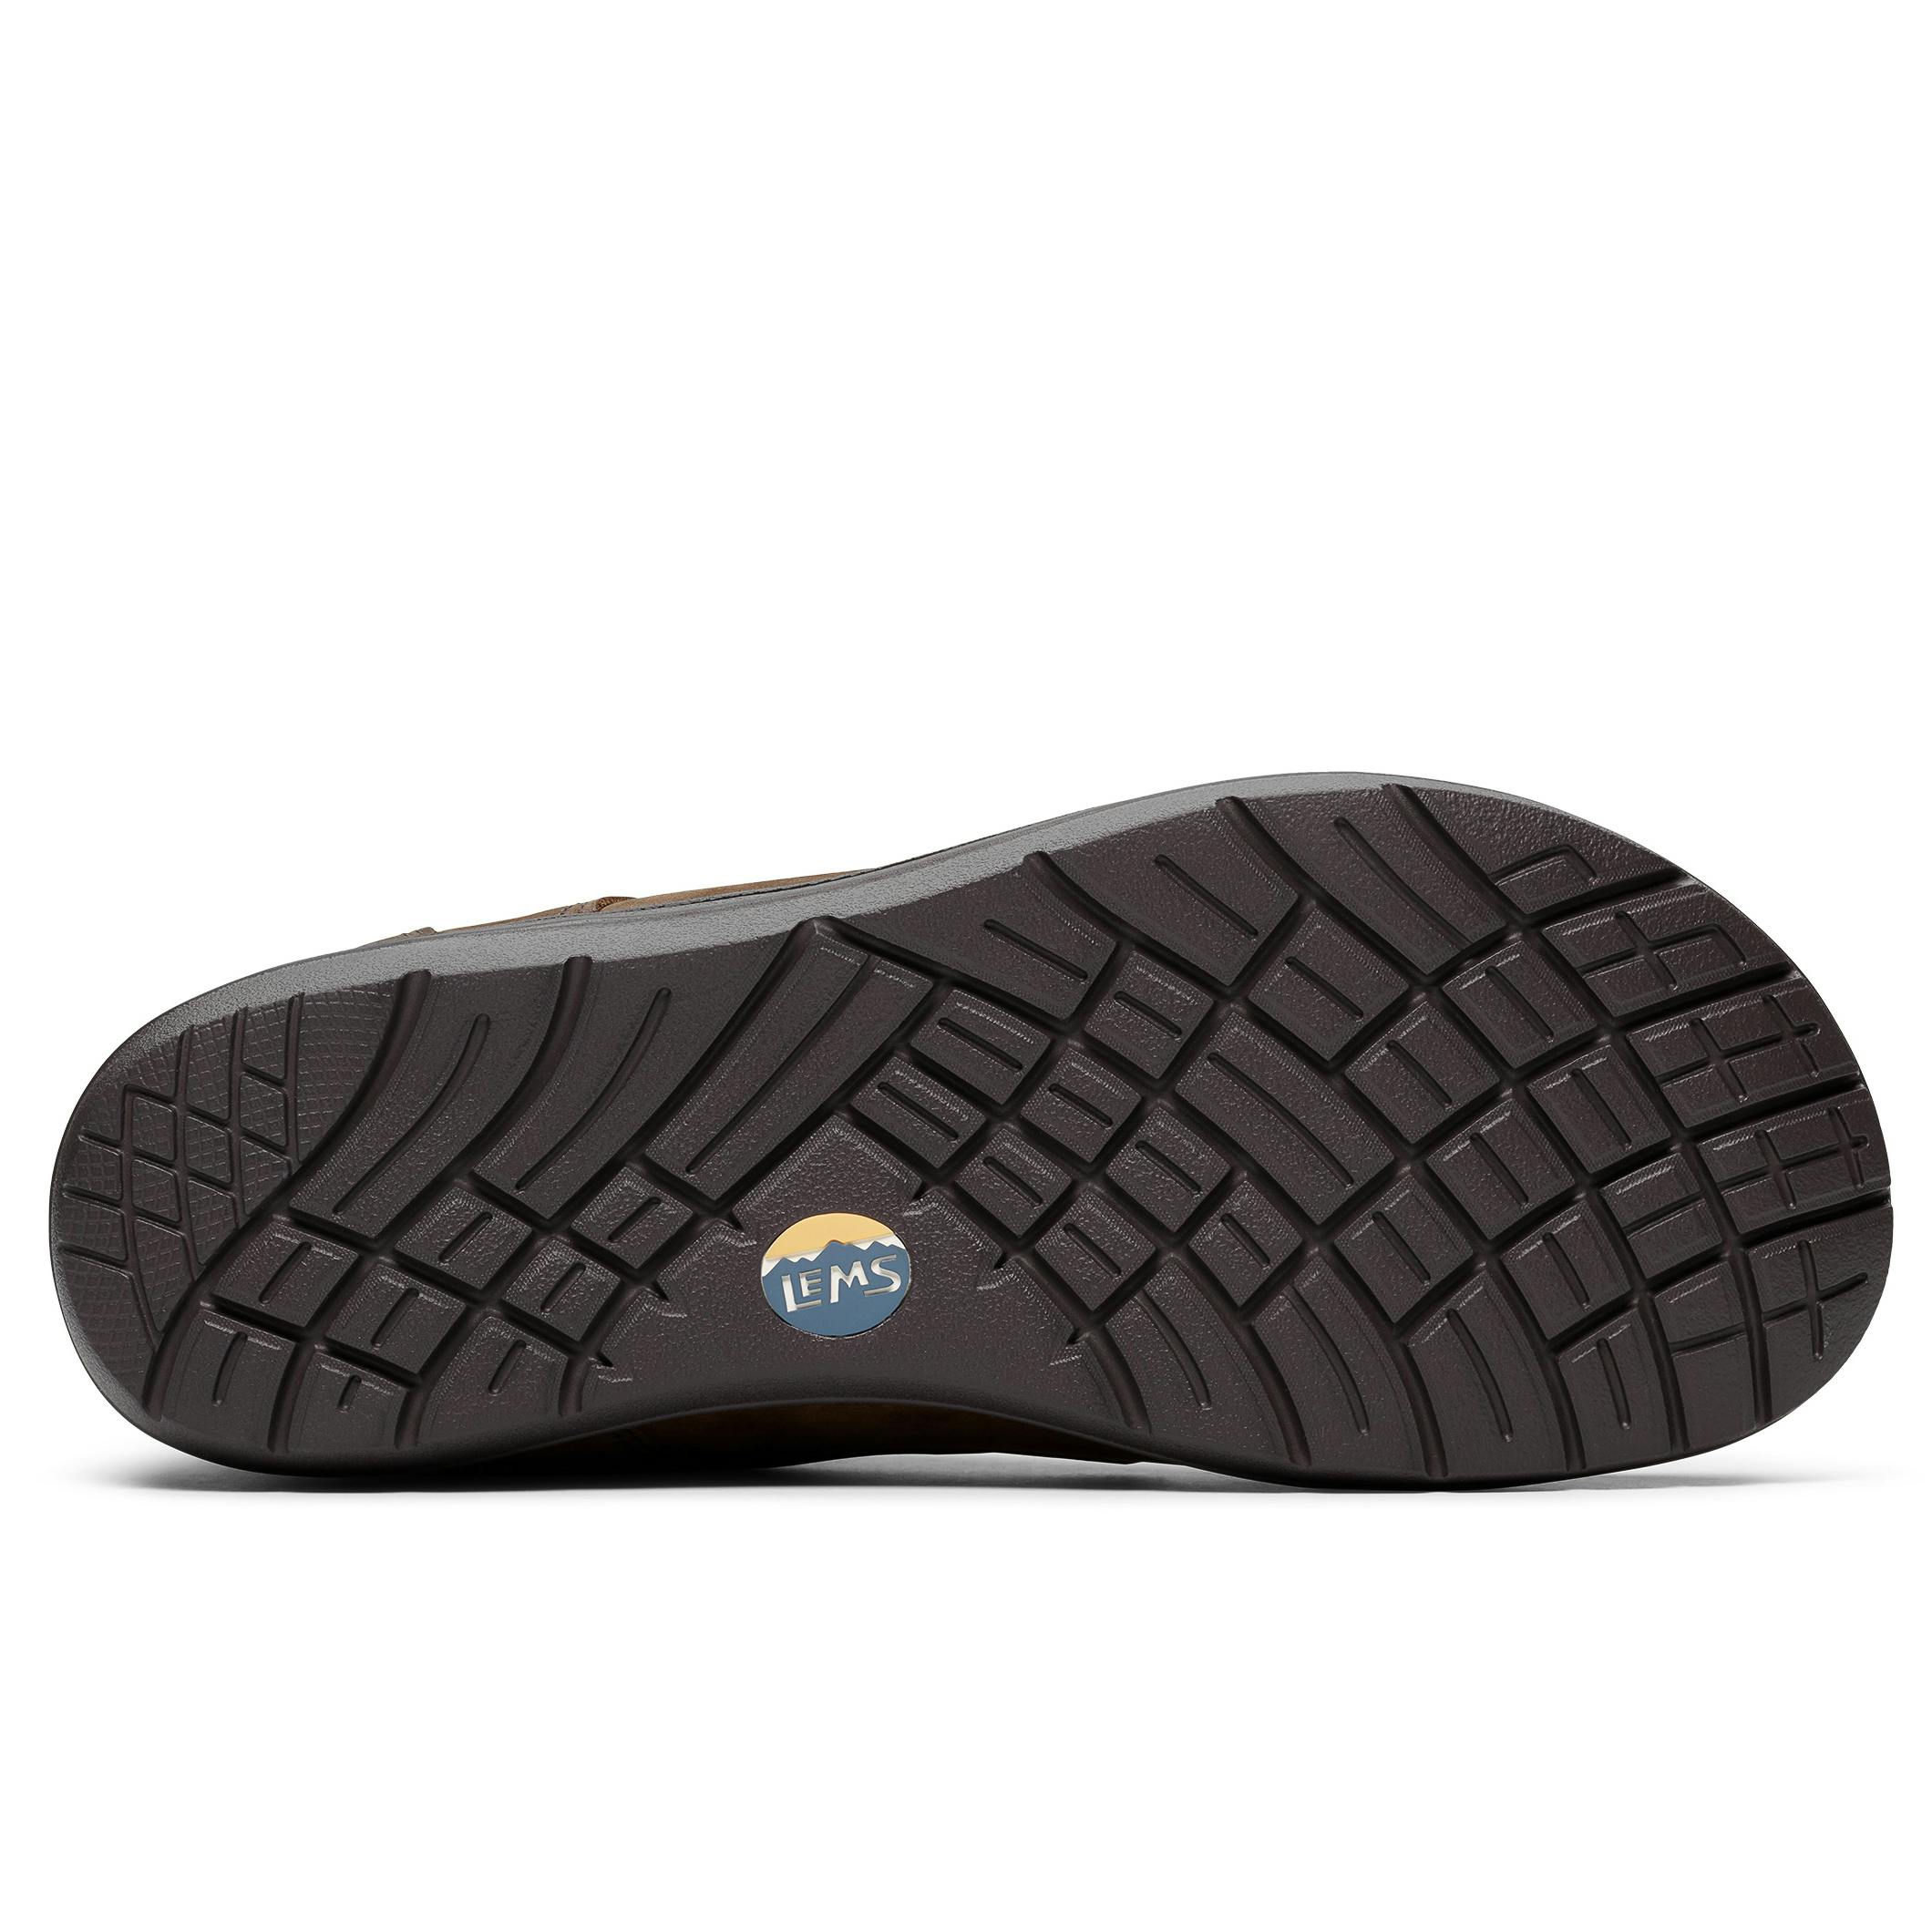 Lems Shoes Boulder Boot Waterproof